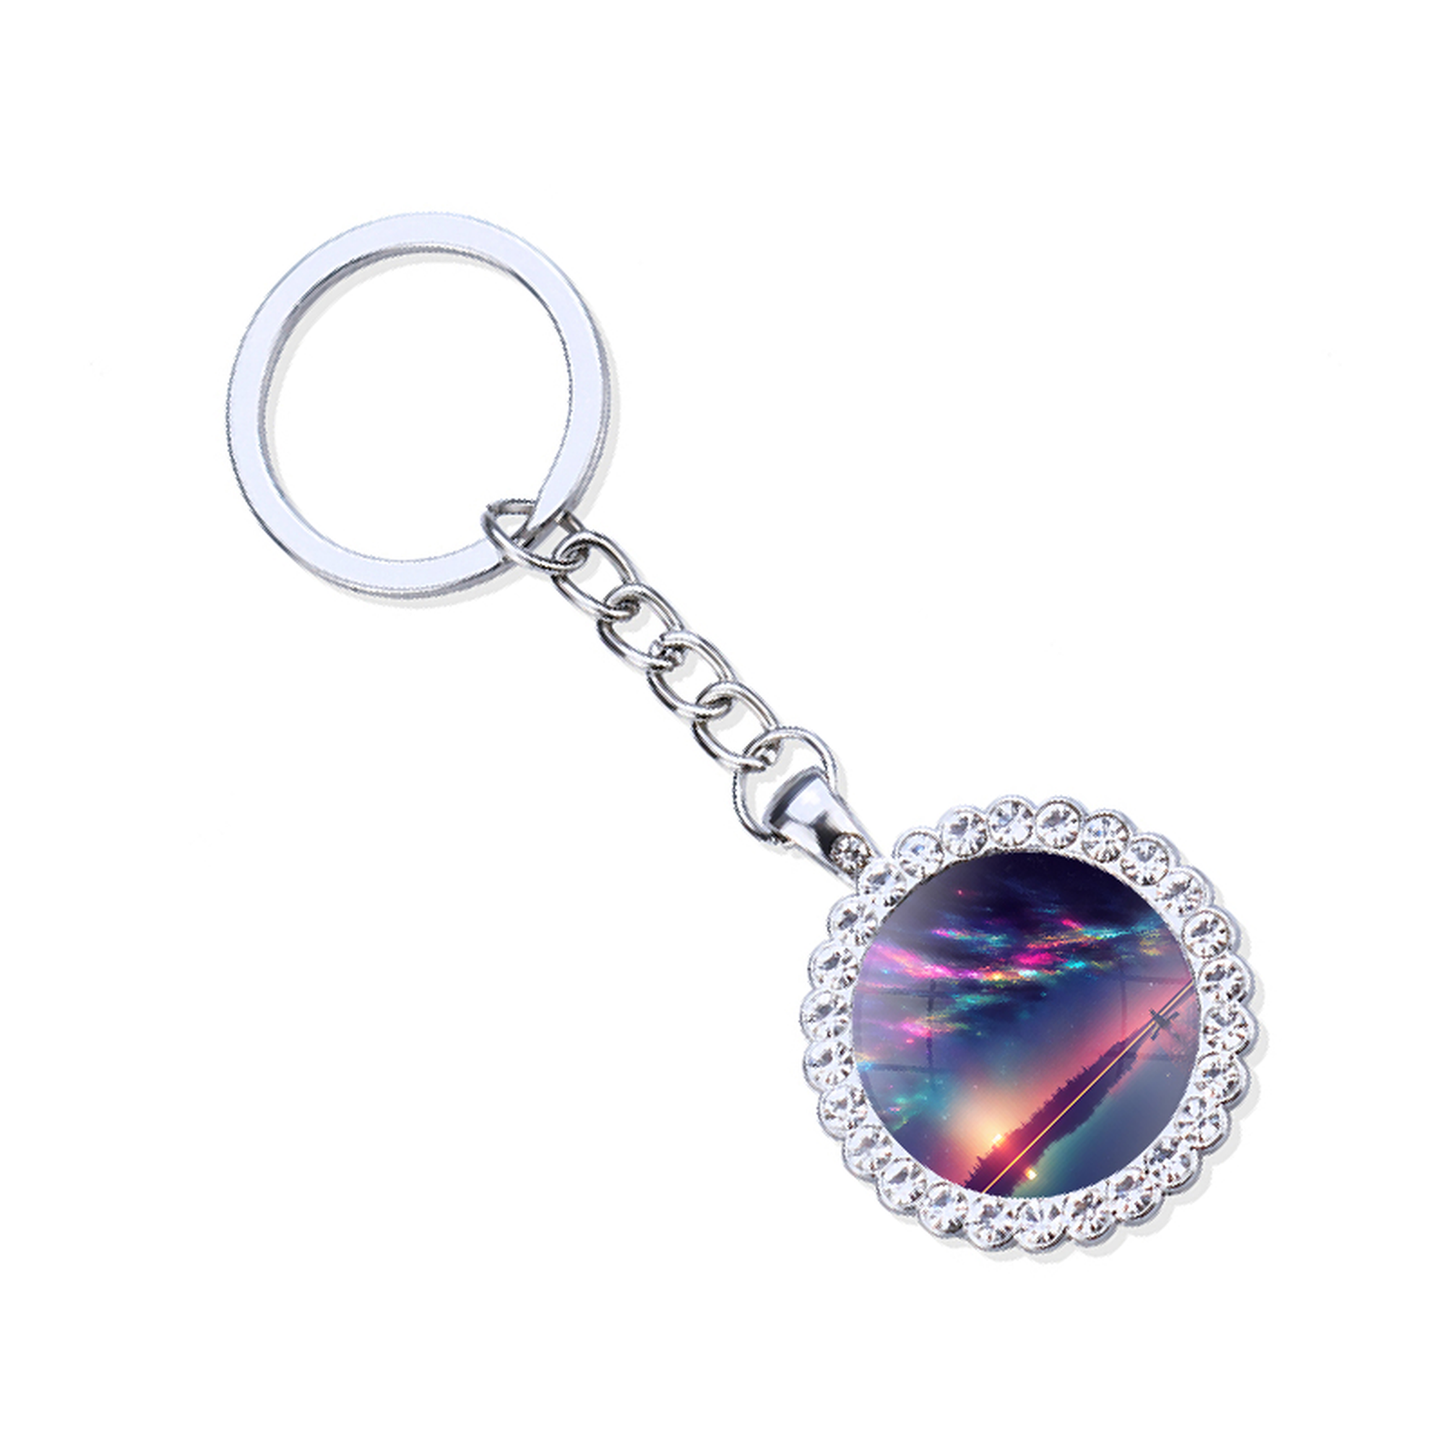 Aurora Borealis Silver Keyring - Northern Light Jewelry - Rhinestones Glass Key Chain - Perfect Aurora Lovers Gift 11